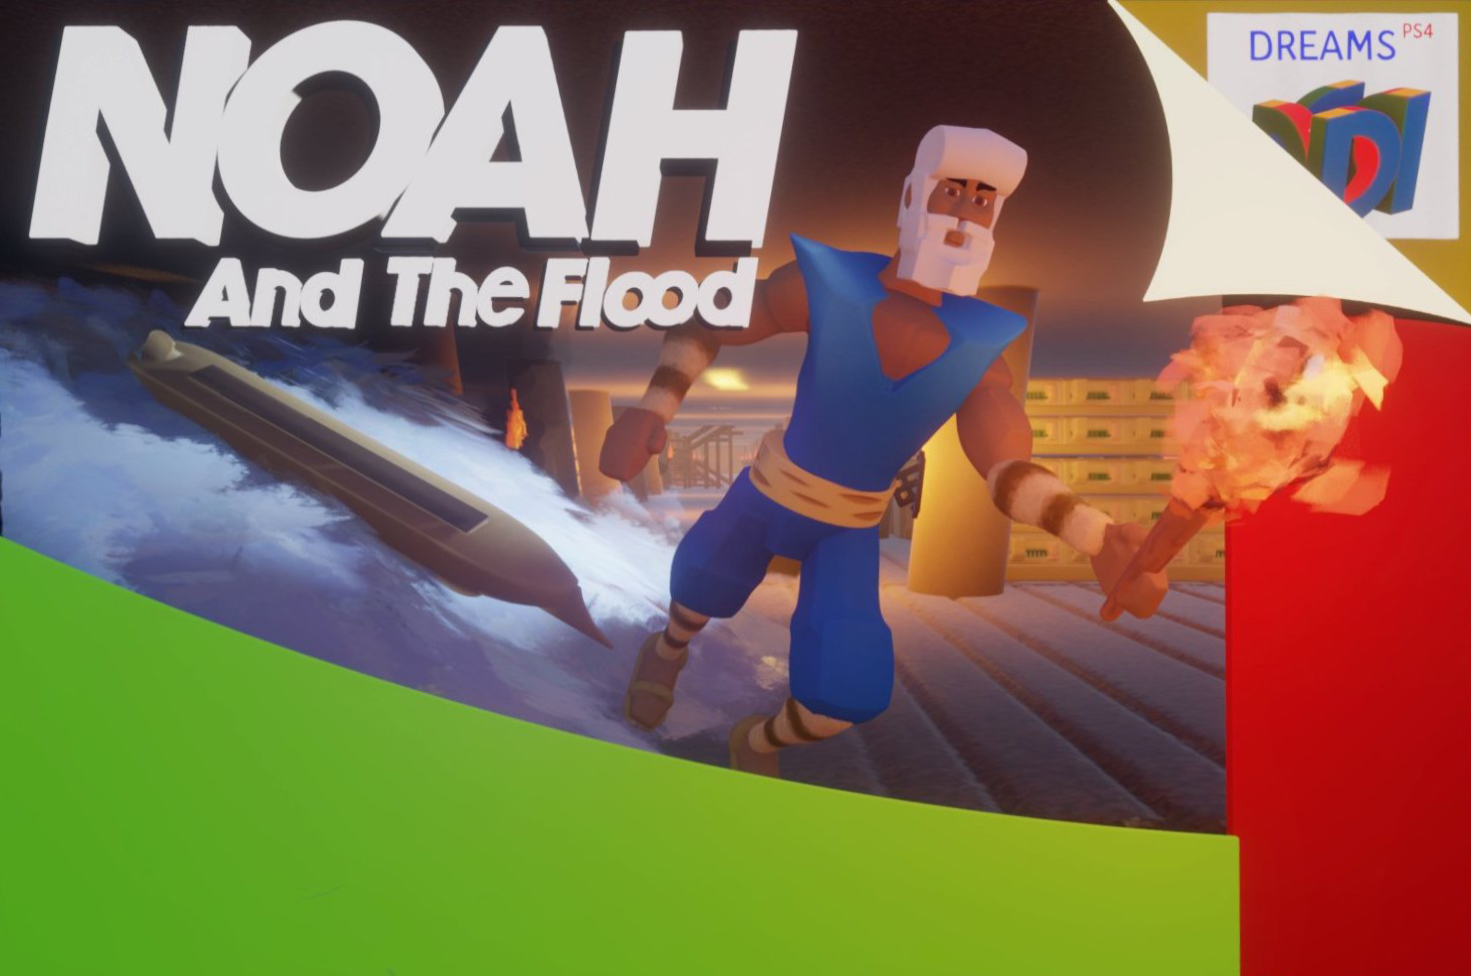 Noah and the Flood on Dreams PS4 Full Playthrough – SA359